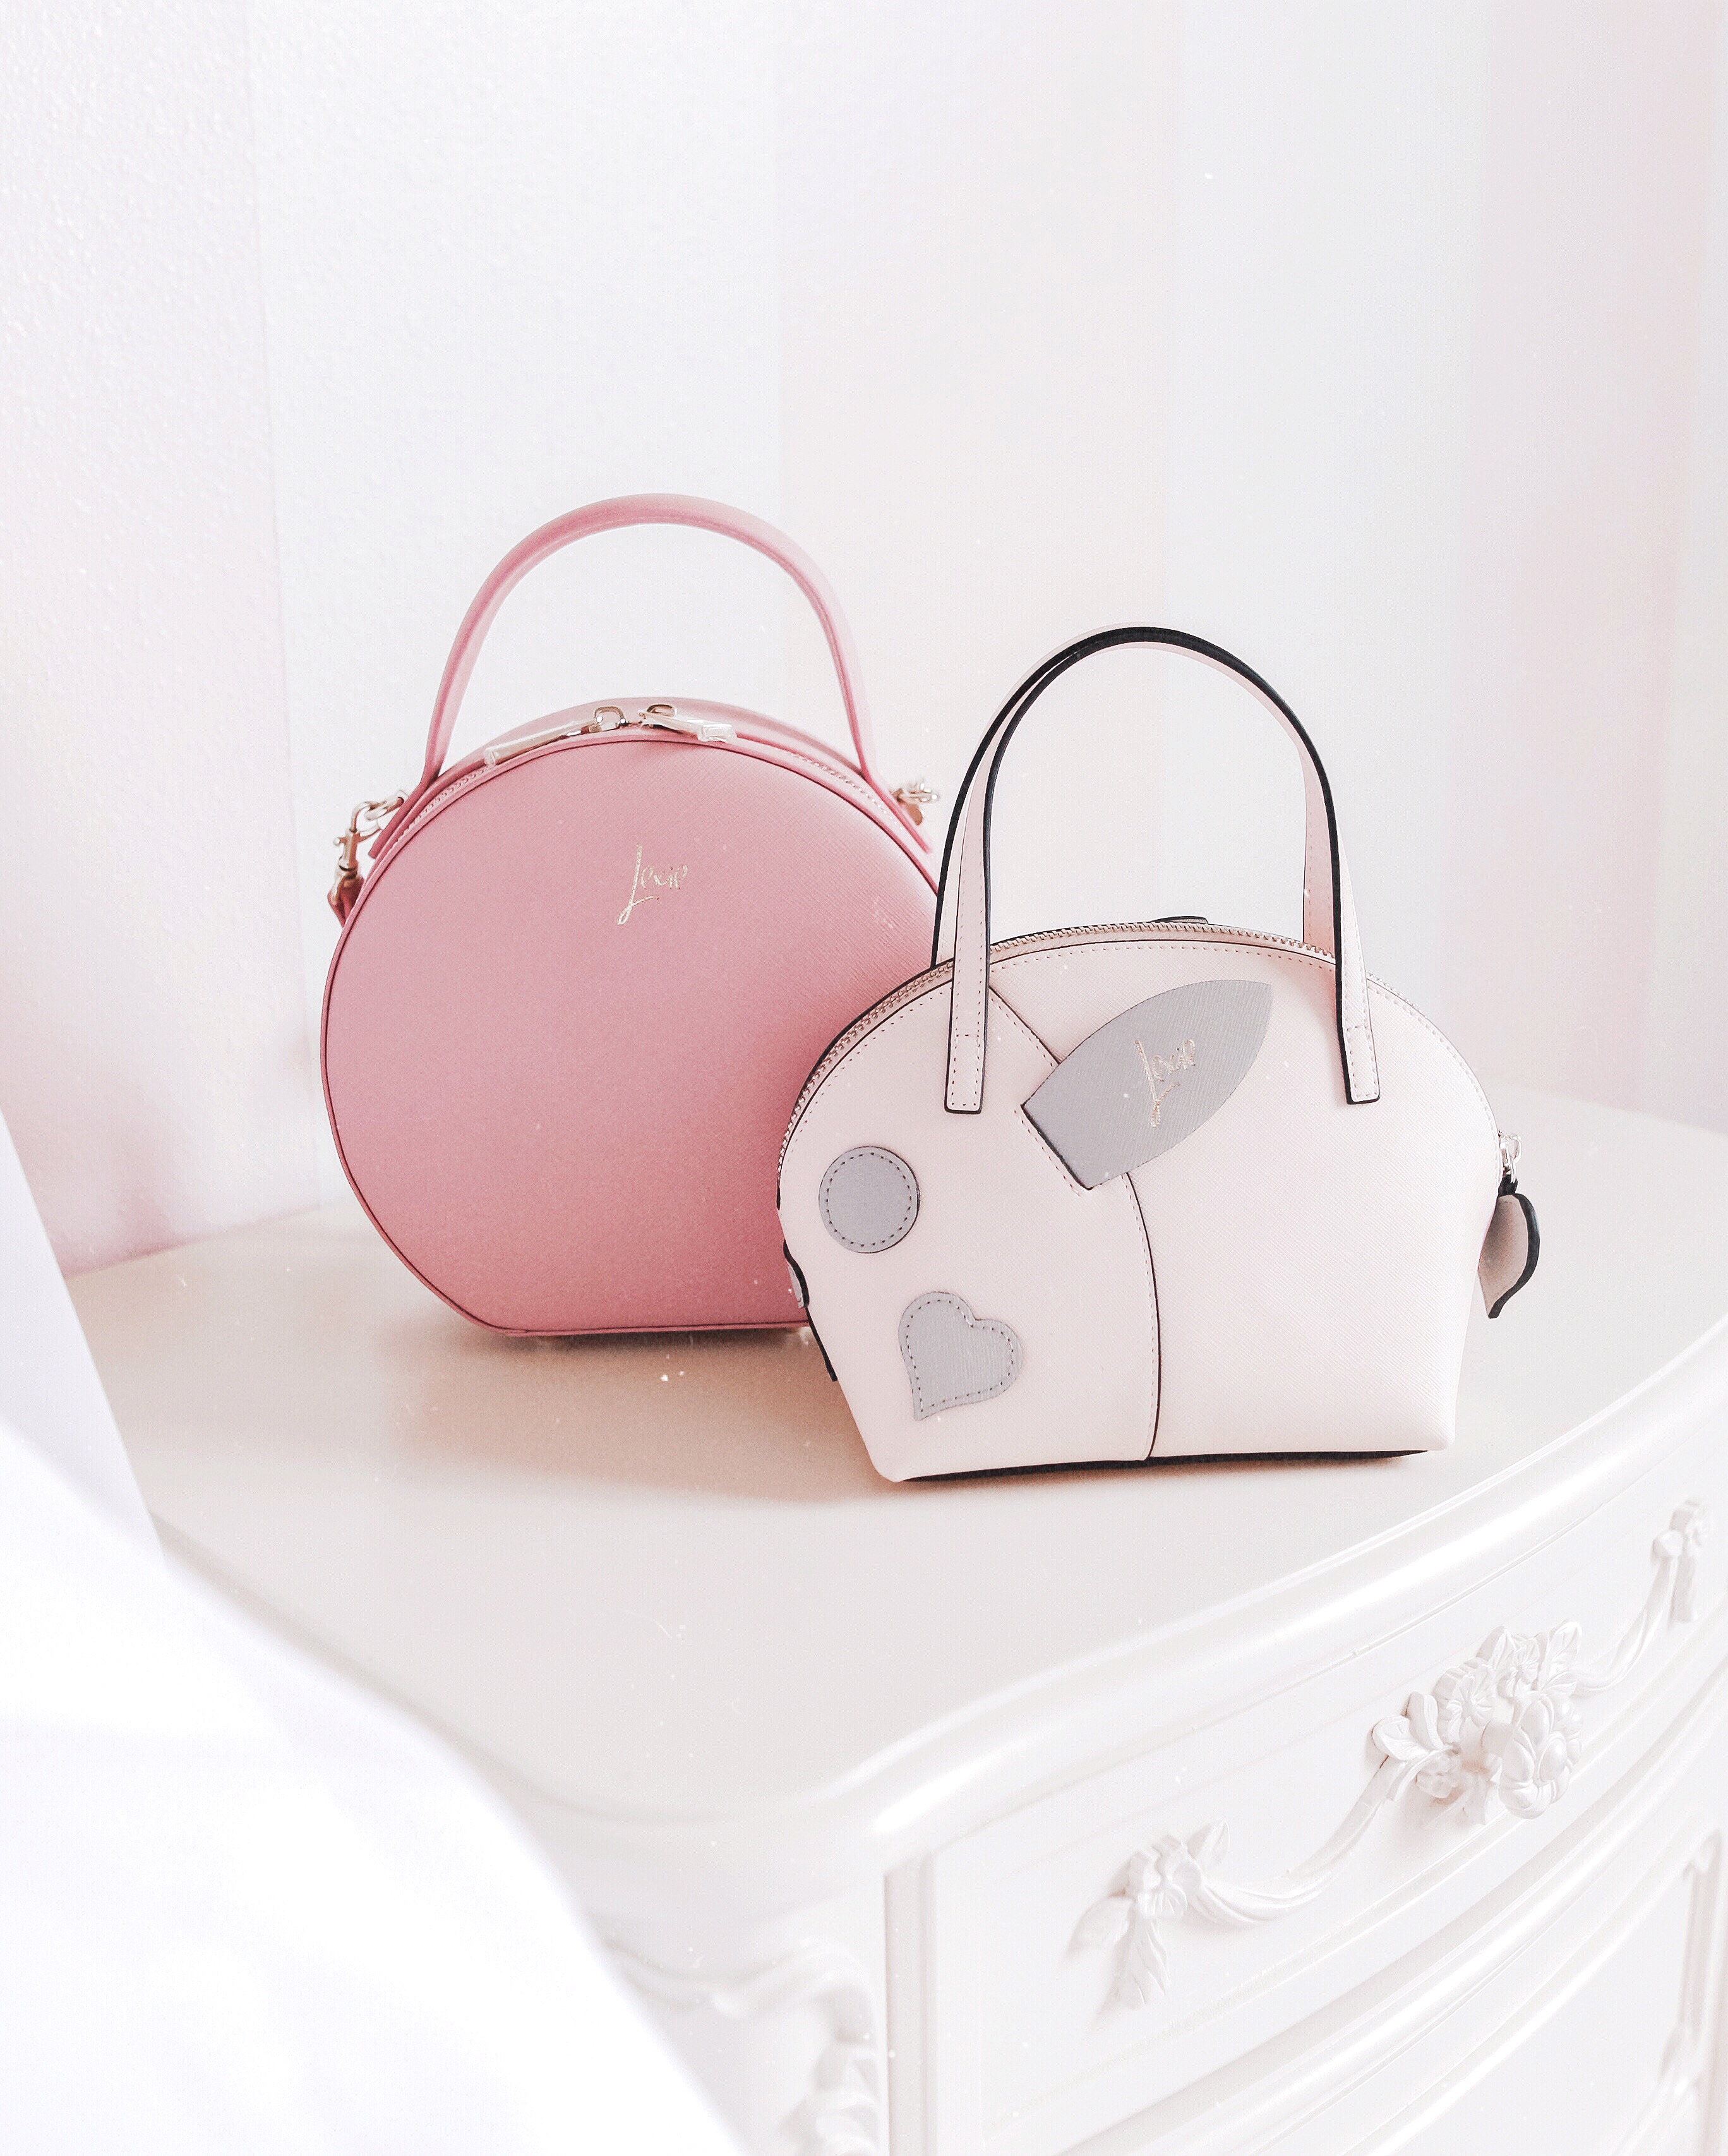 Handbags For Spring That Are Oh So Feminine & Cute